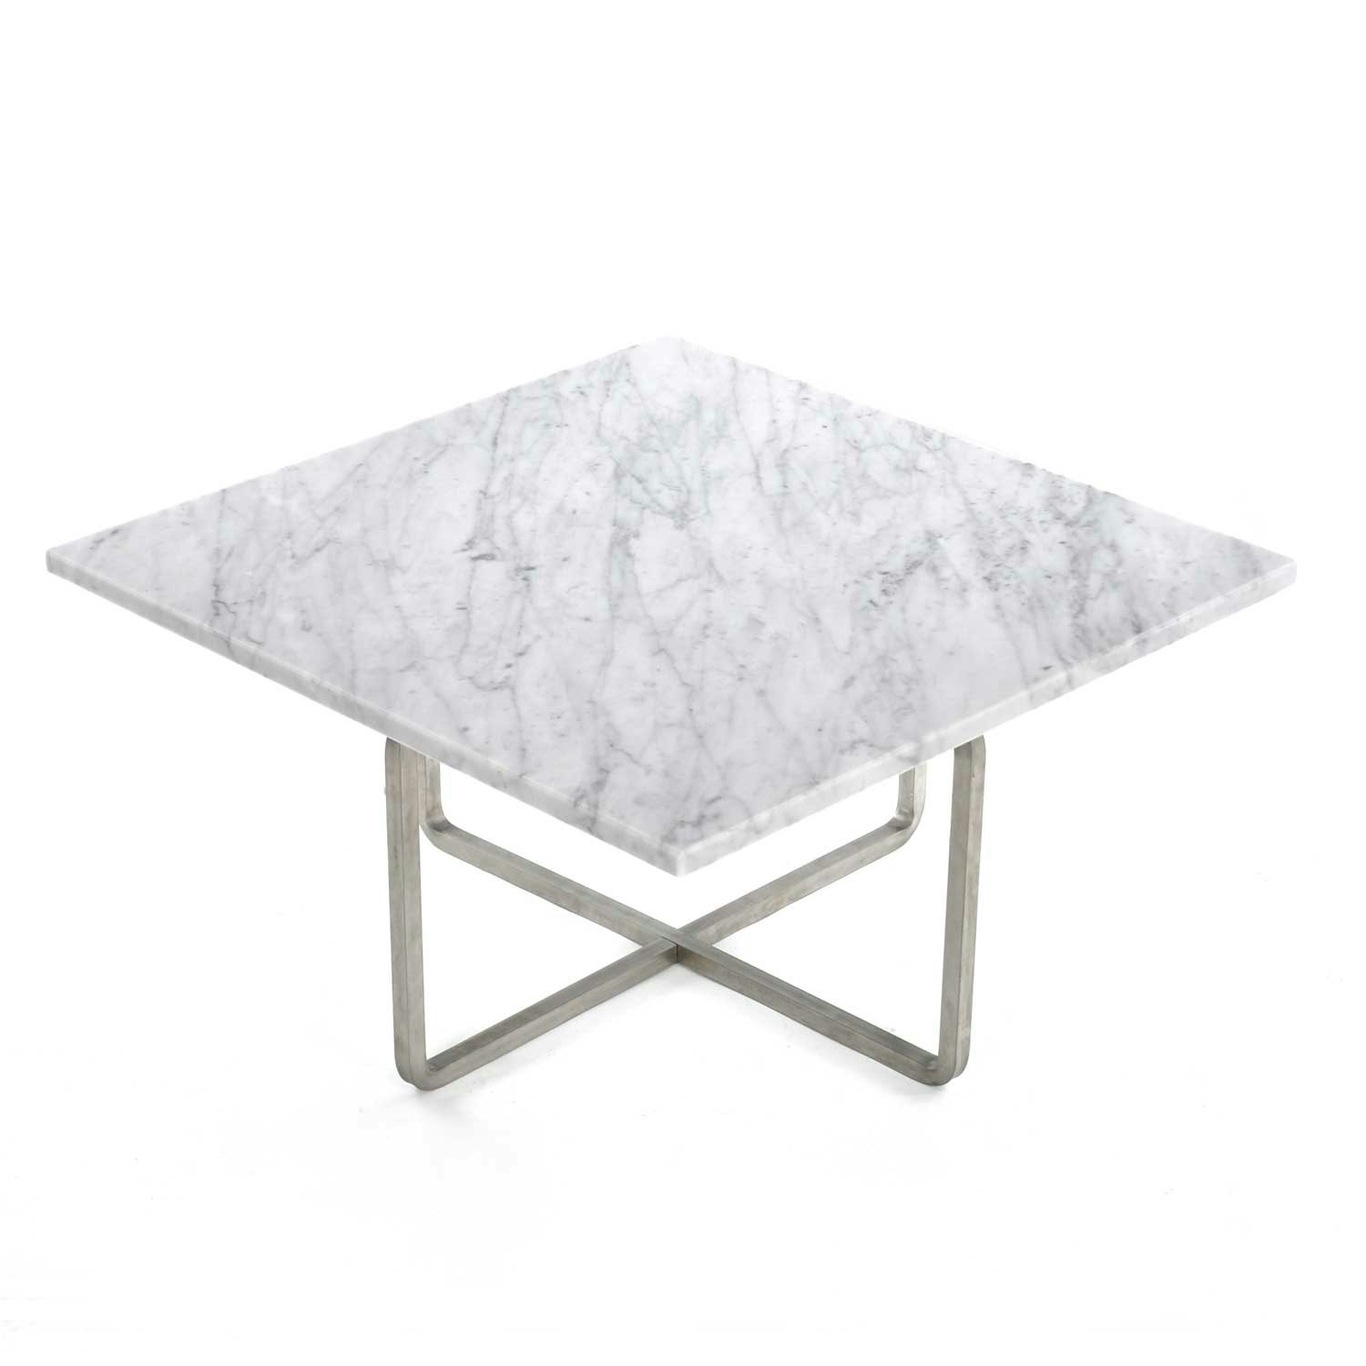 Ninety Coffee Table 60 cm, Steel Base, White Marble